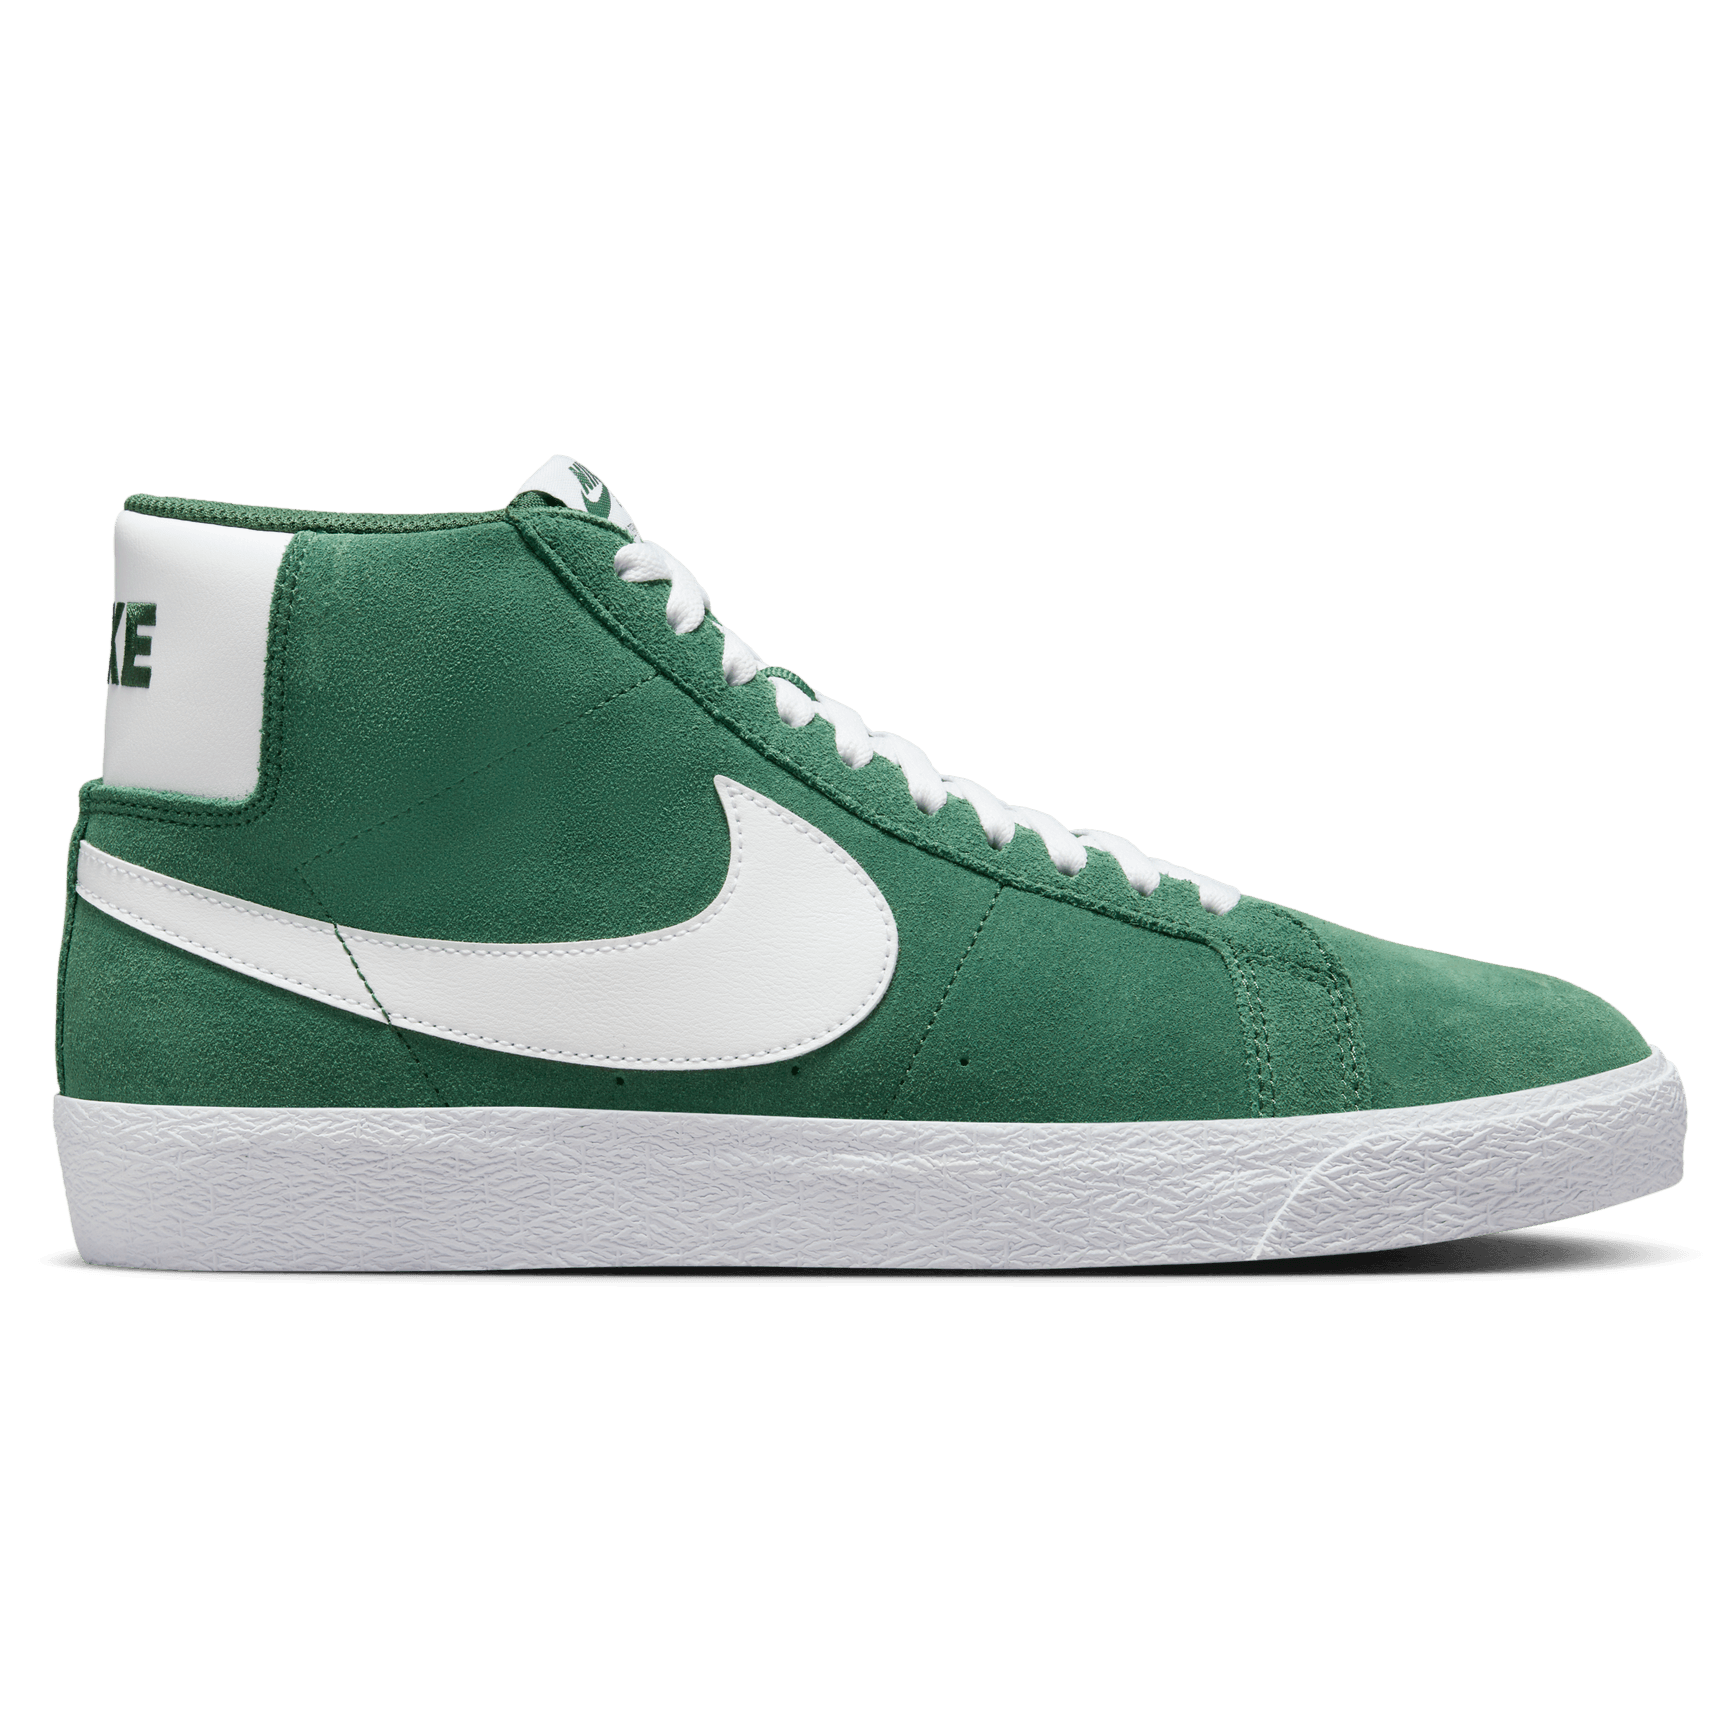 Fir/White Nike SB Blazer Mid Skateboard Shoe